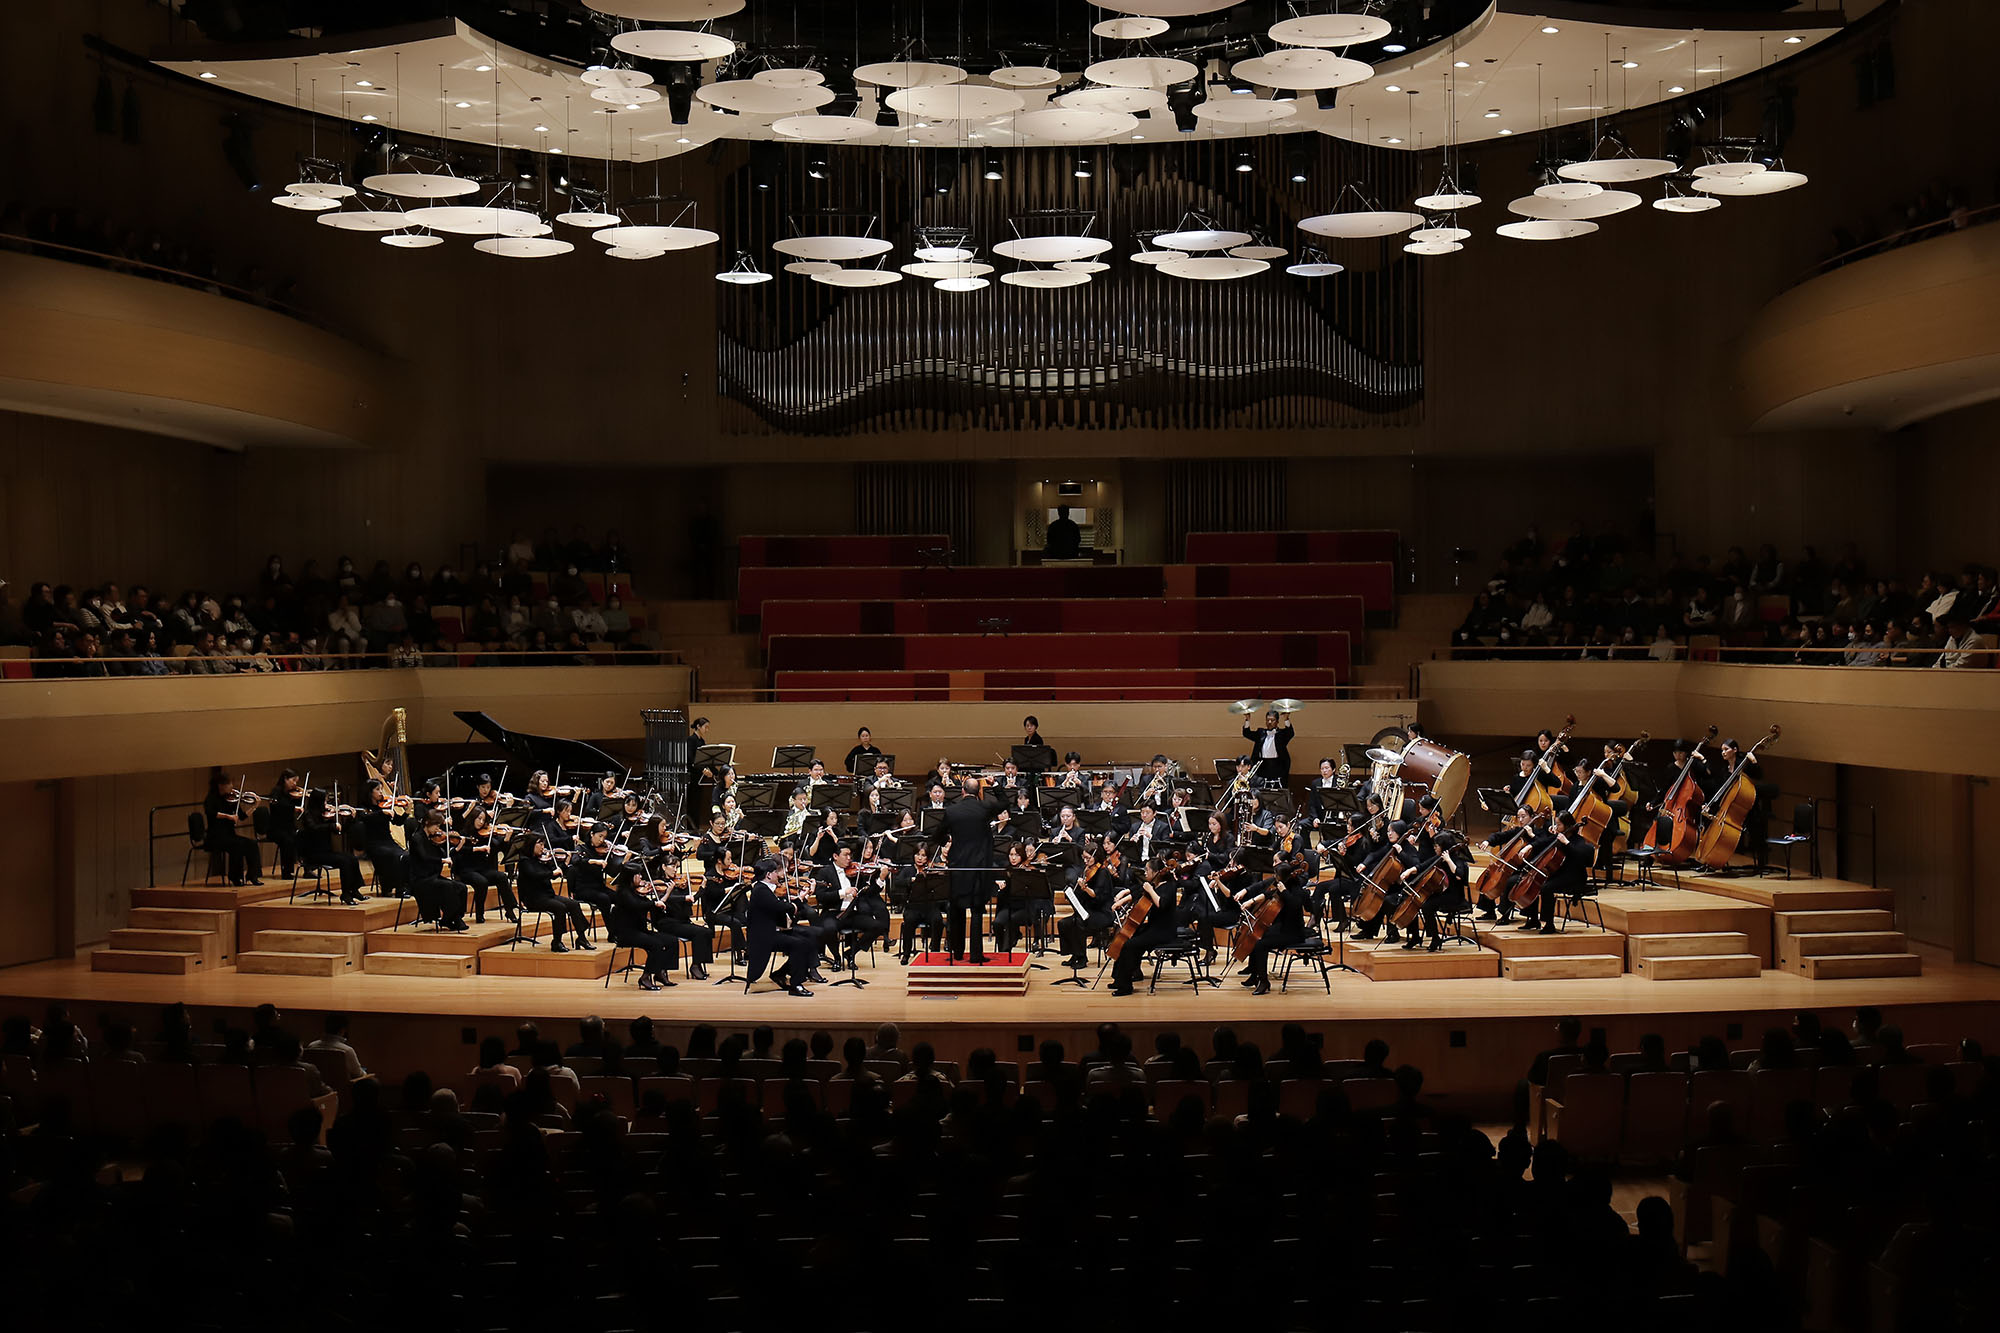 [11.10]Bucheon Philharmonic Orchestra 309th Subscription Concert